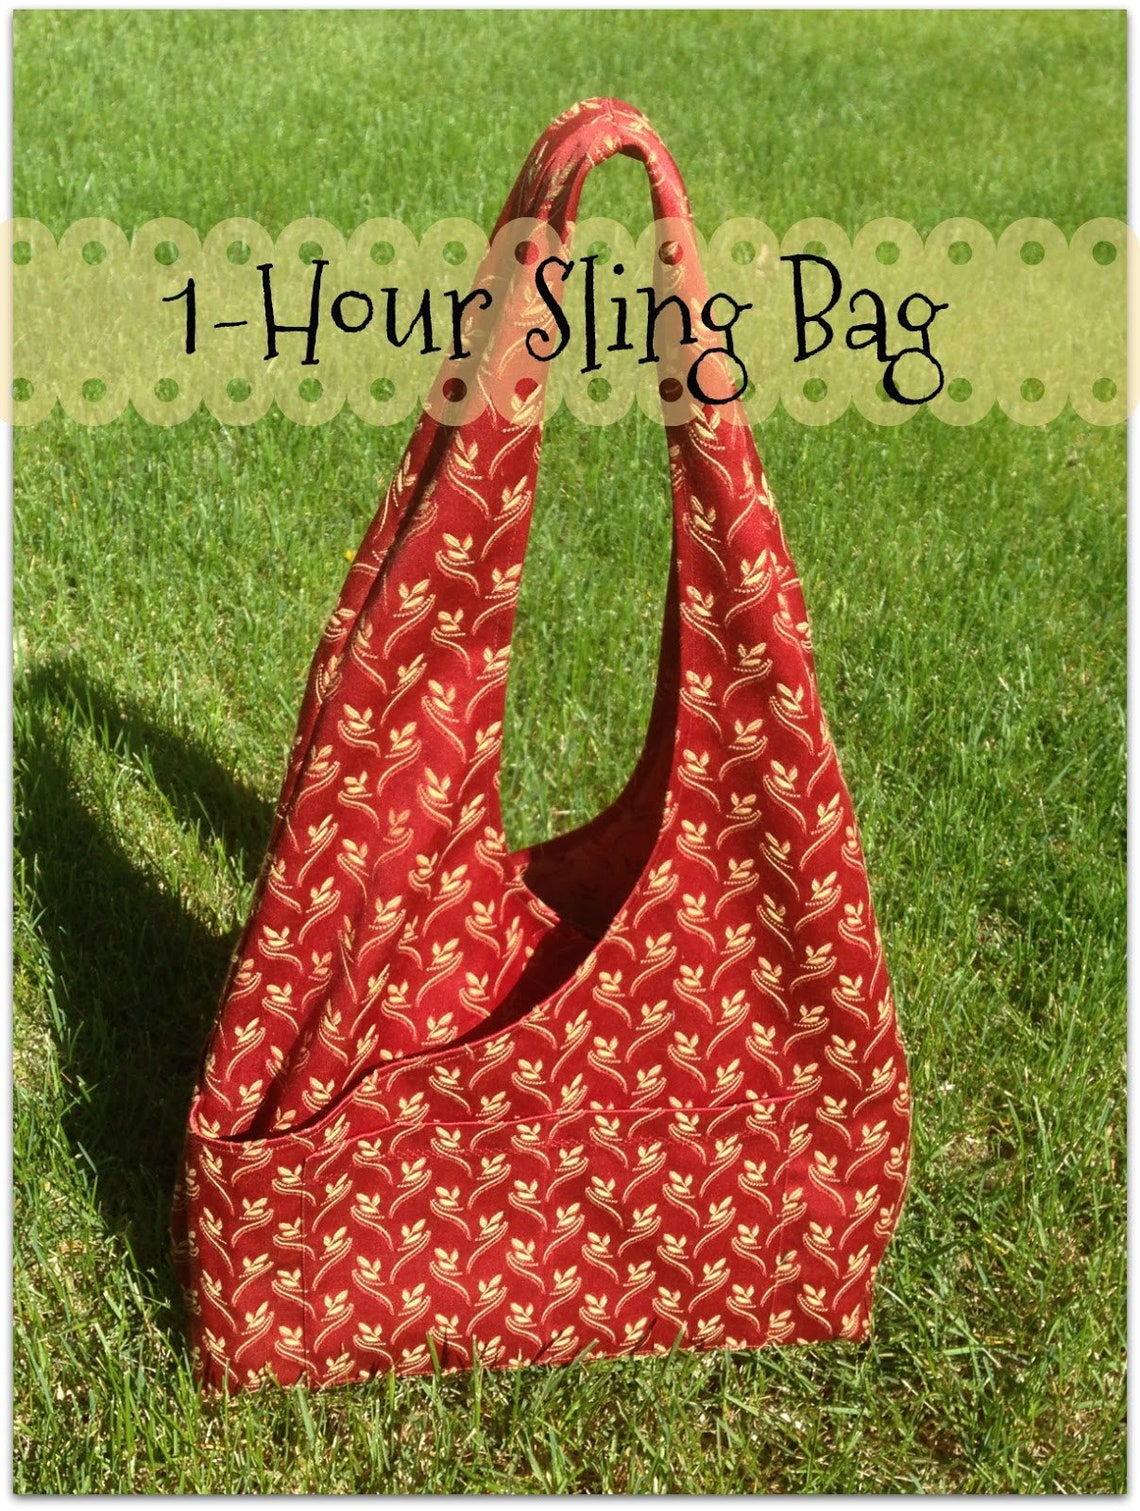 1-hour Sling Bag Pattern - Etsy